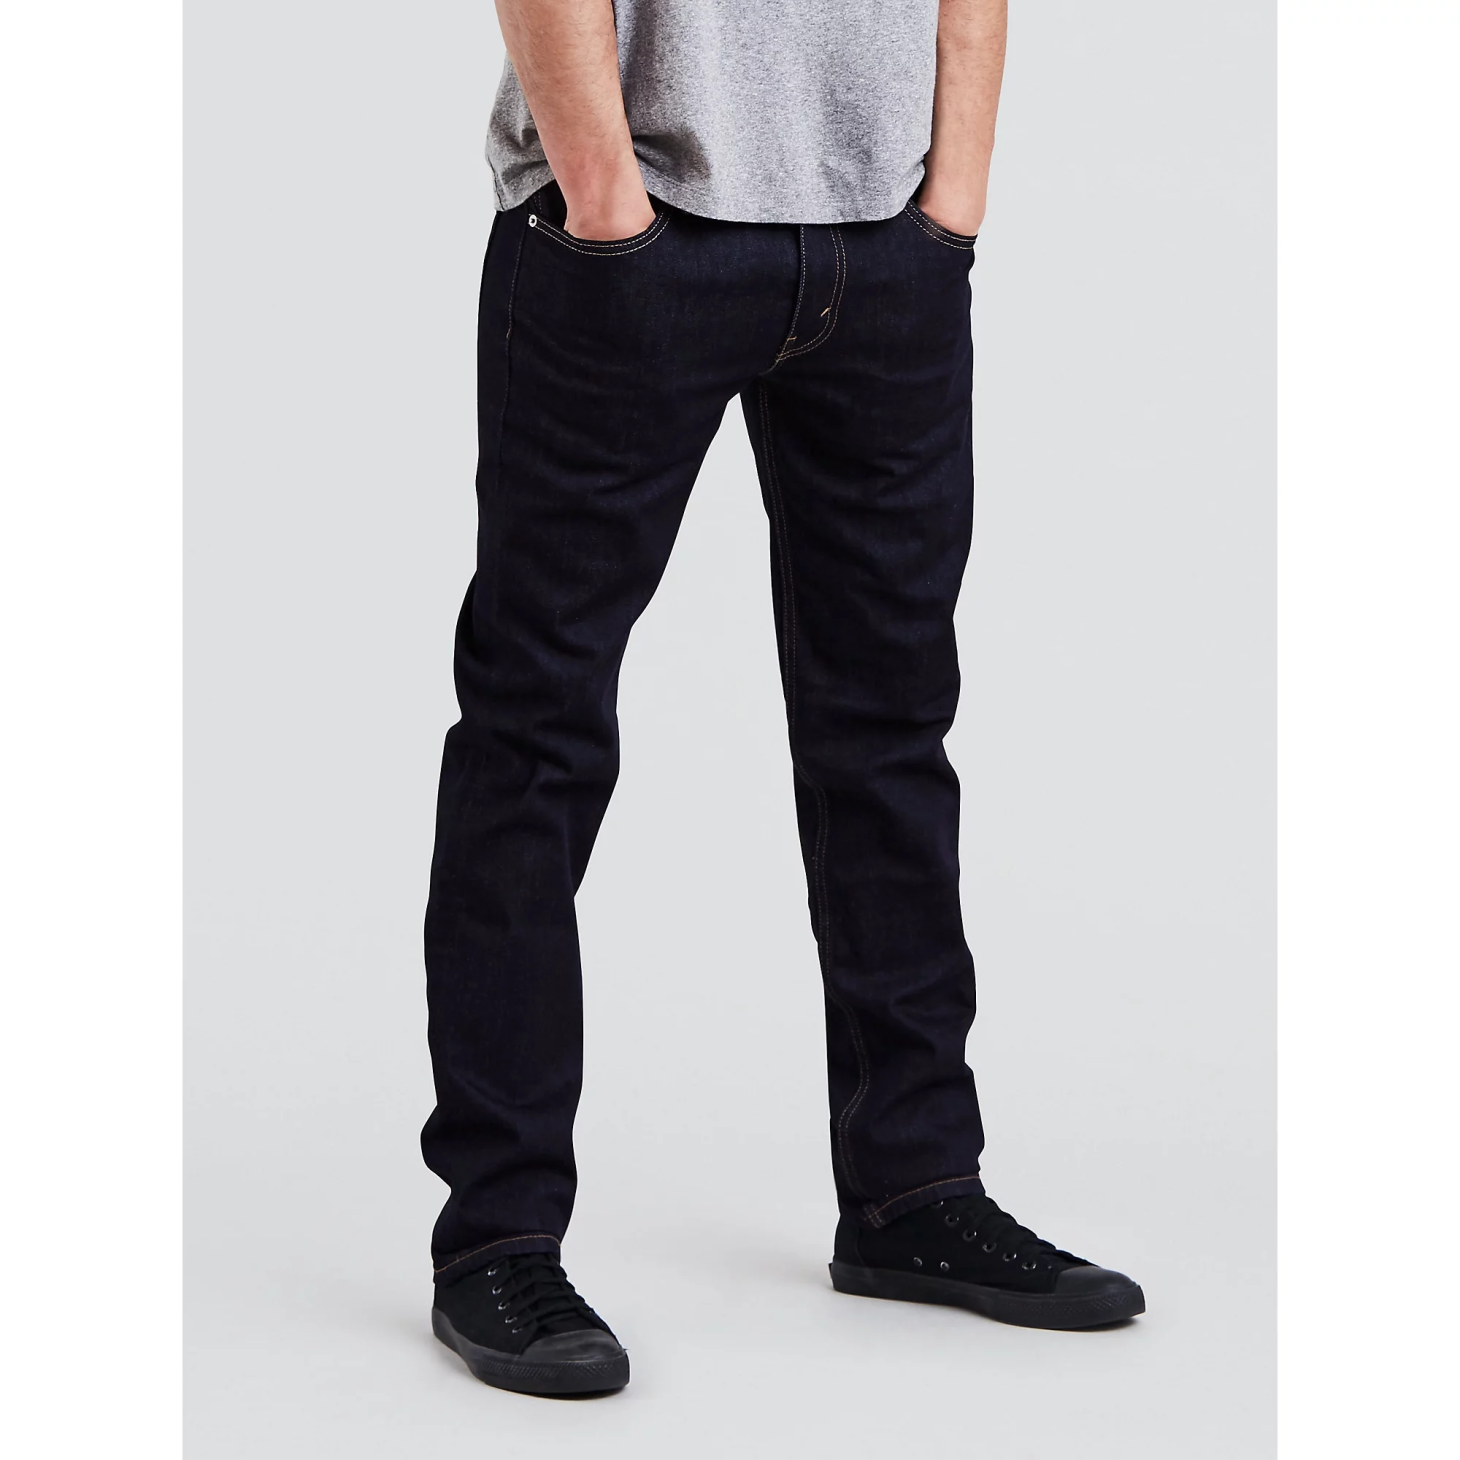 Levi's 511 slim fit jeans